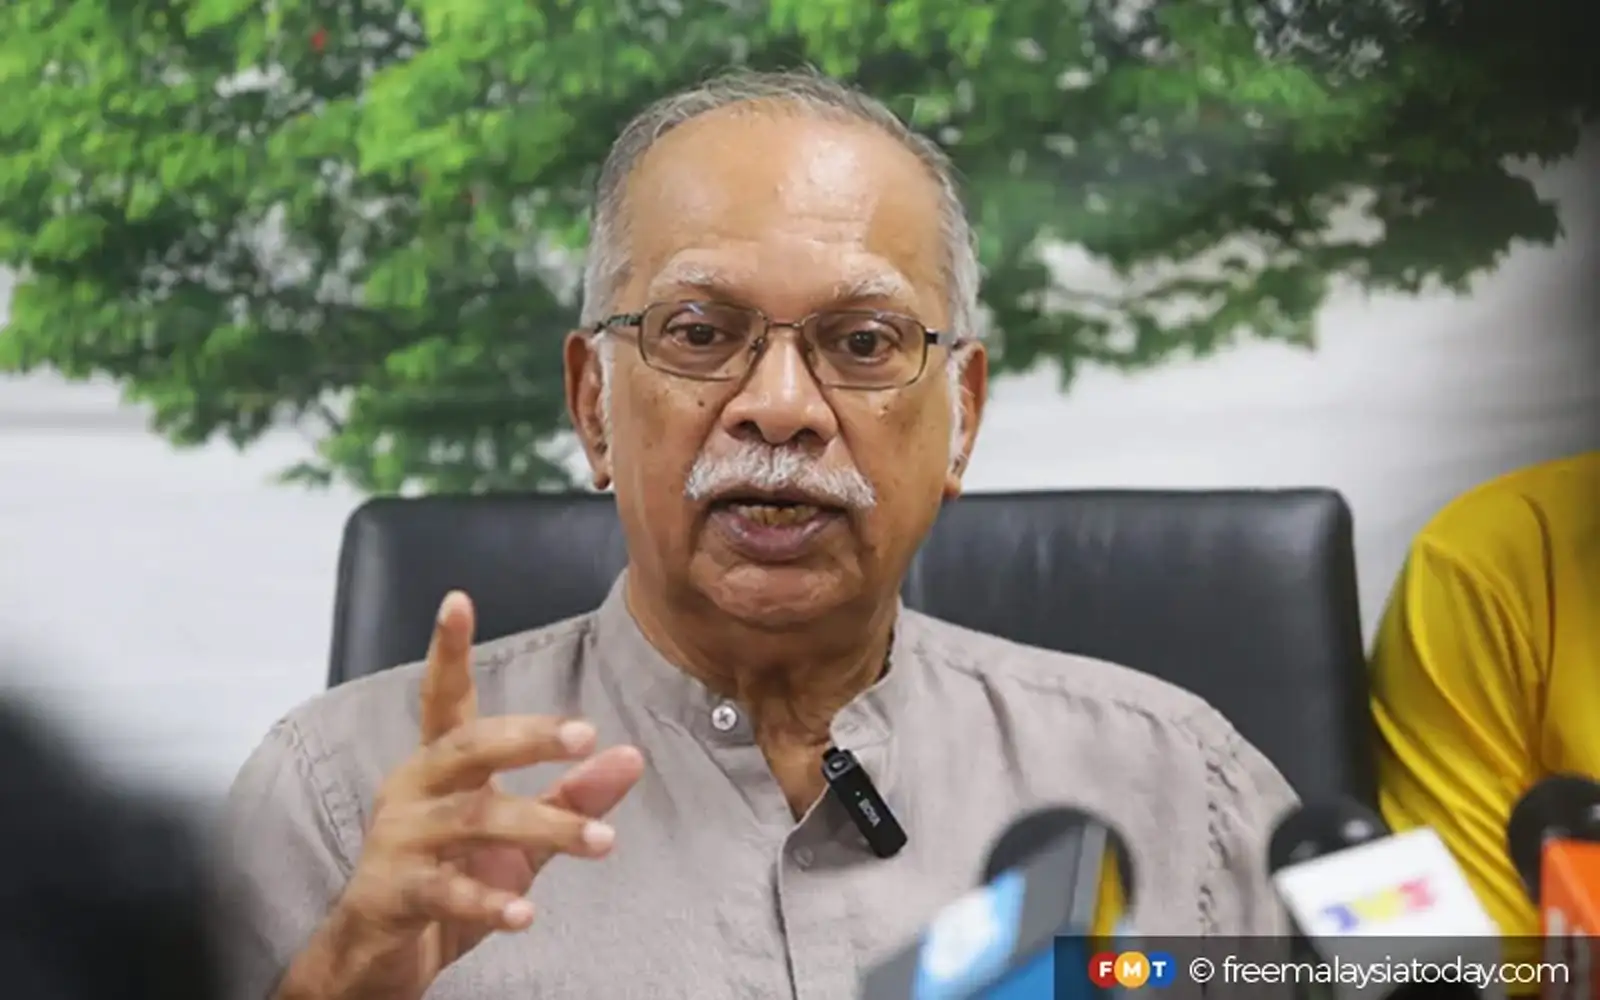 kuala kubu baharu polls will test indian support for pn, says rama